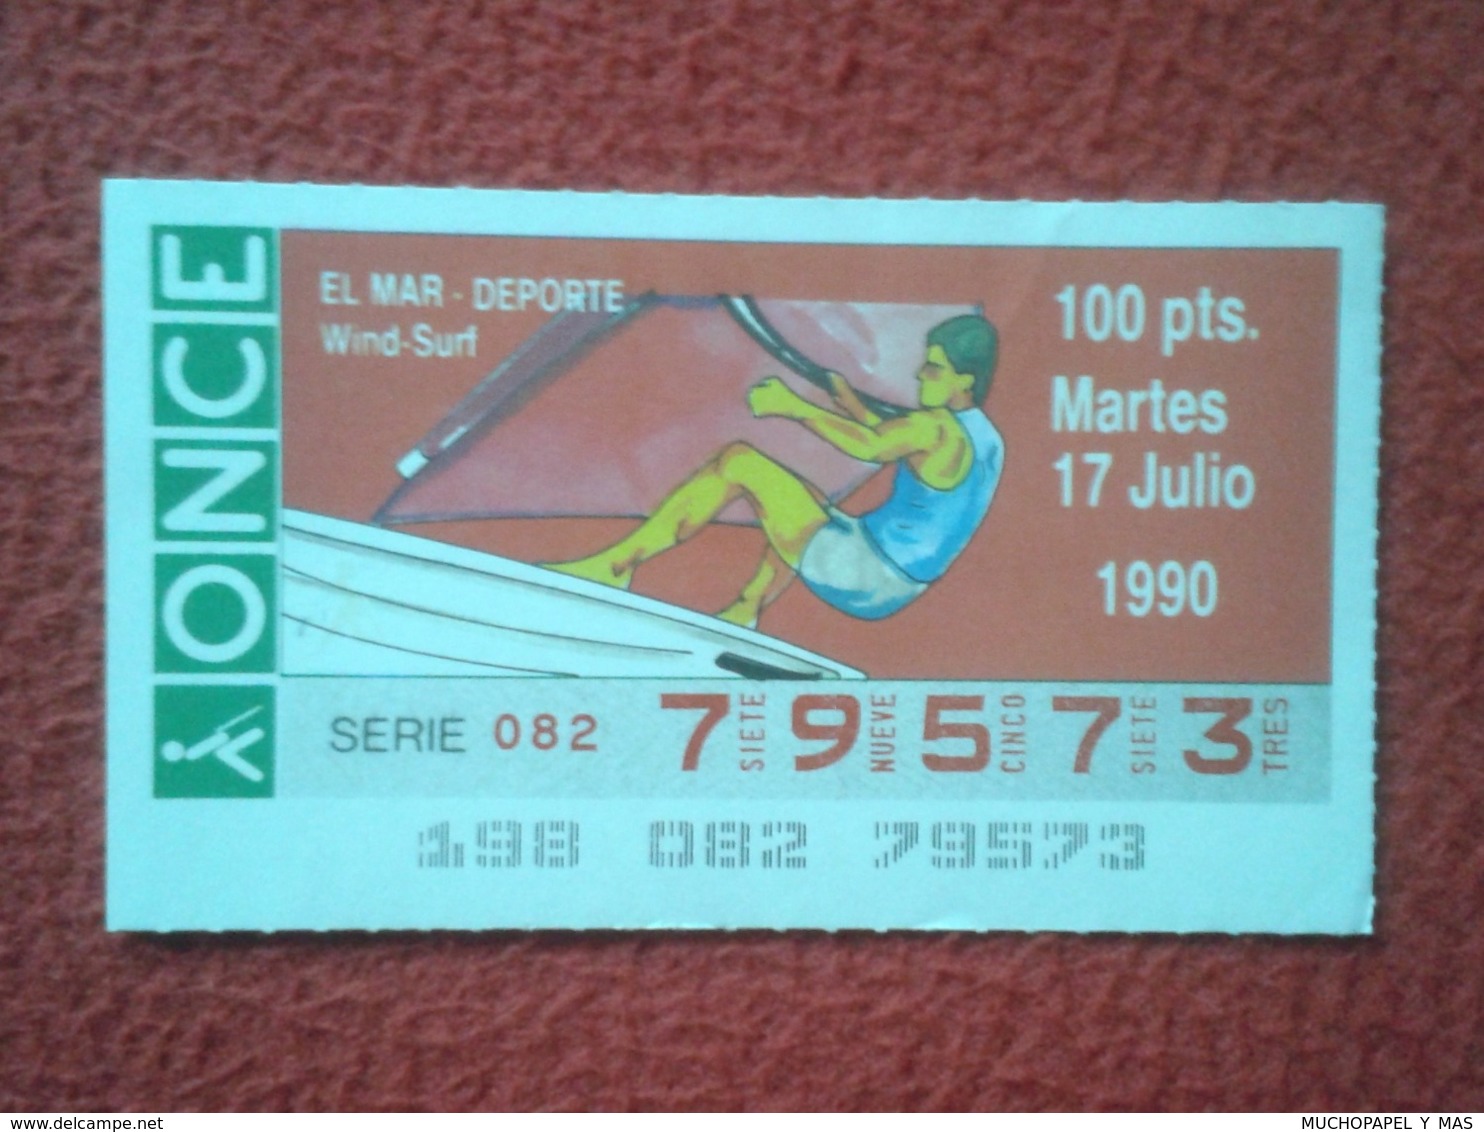 CUPÓN DE ONCE LOTTERY SPAIN LOTERÍA ESPAGNE EL MAR THE SEA LA MER 1990 DEPORTE WIND-SURF WINDSURF WINDSURFING SPORT VELA - Billetes De Lotería